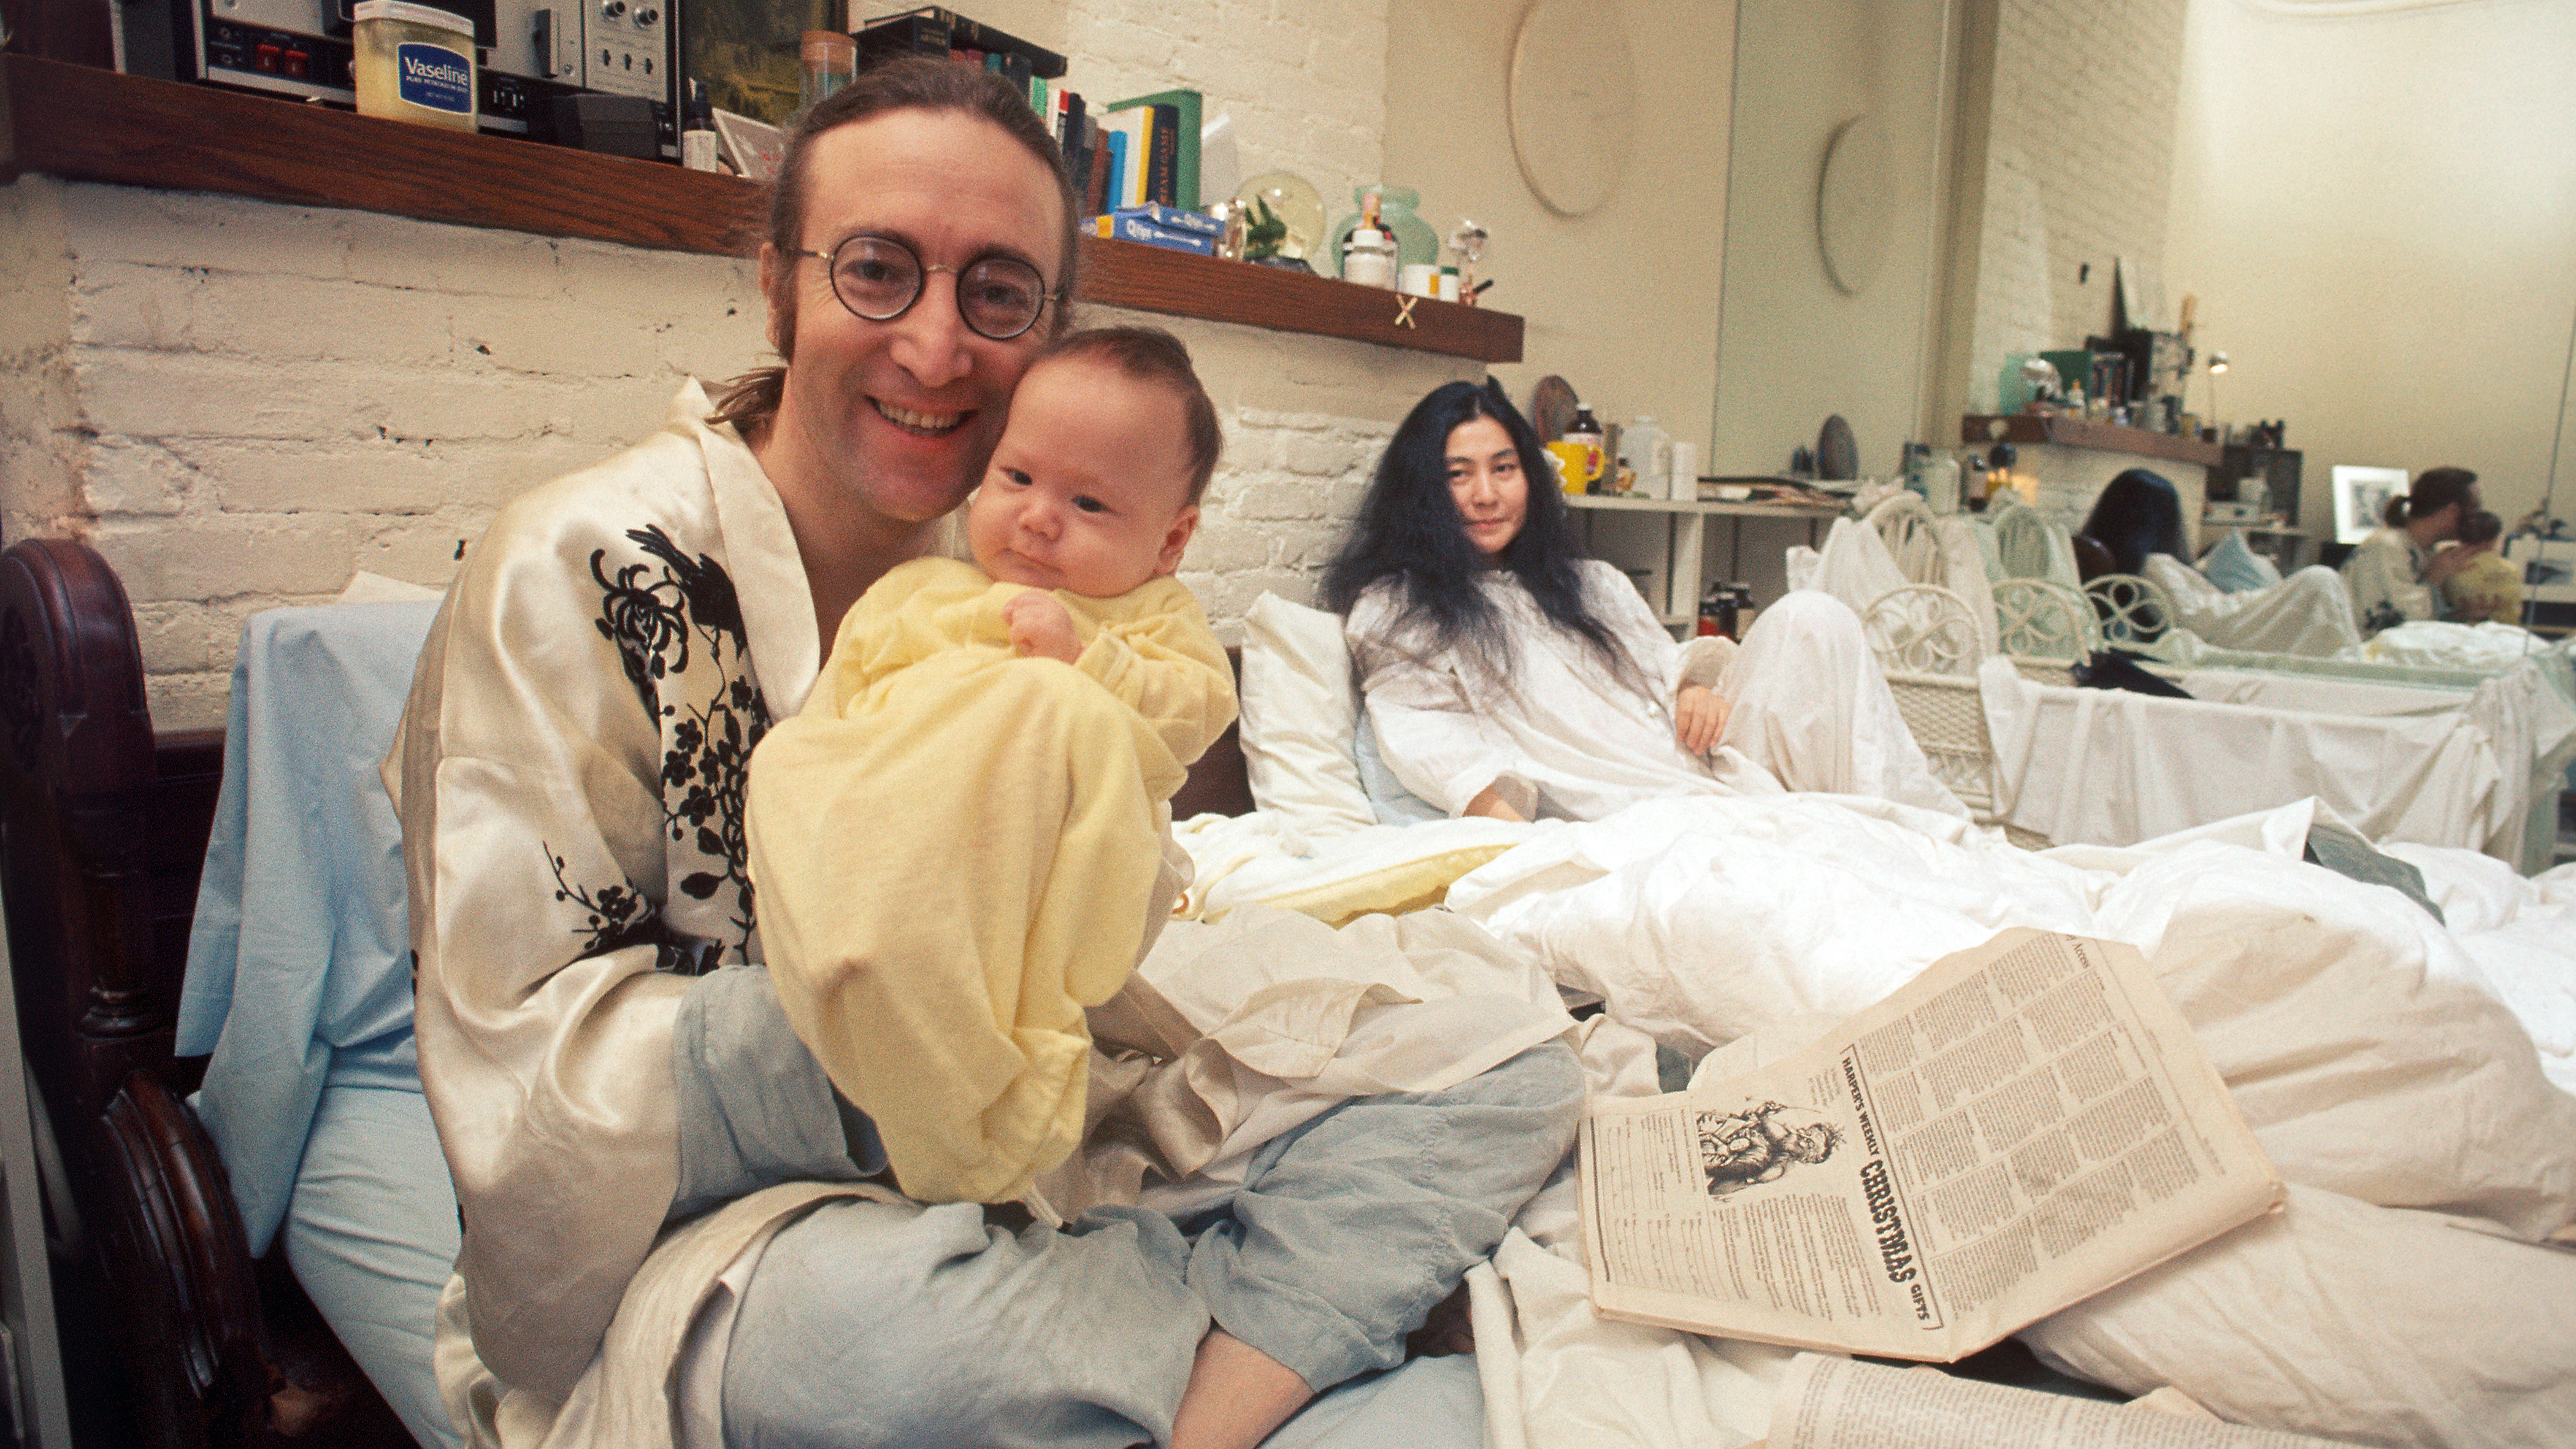 John Lennon with Yoko Ono and baby Sean, December 1975